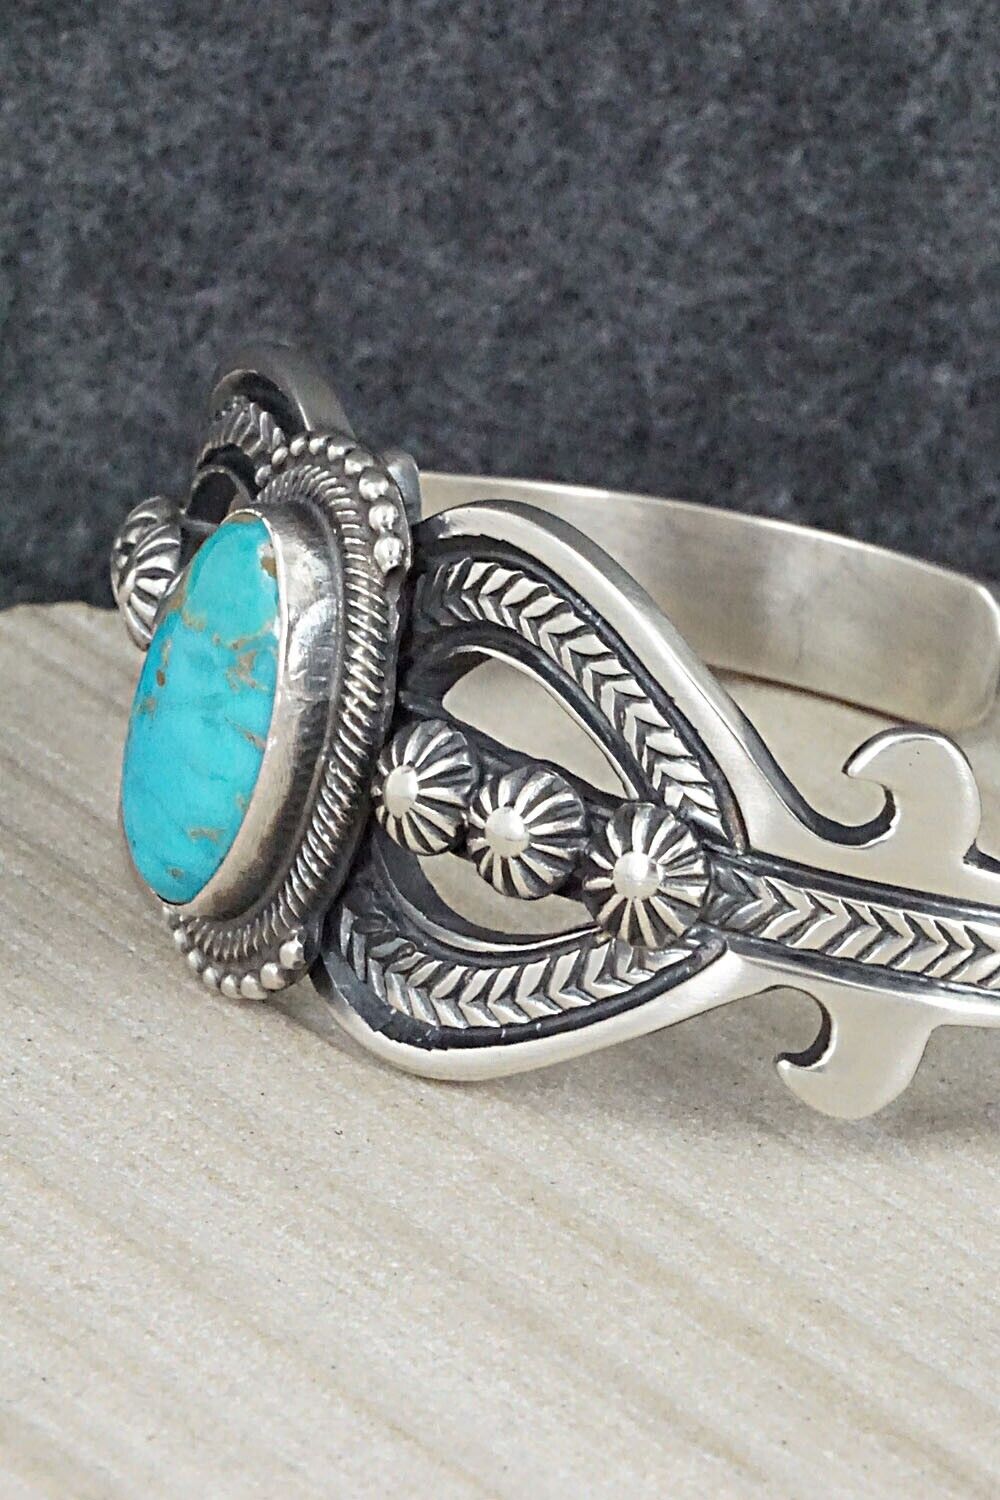 Turquoise & Sterling Silver Bracelet - Leon Martinez